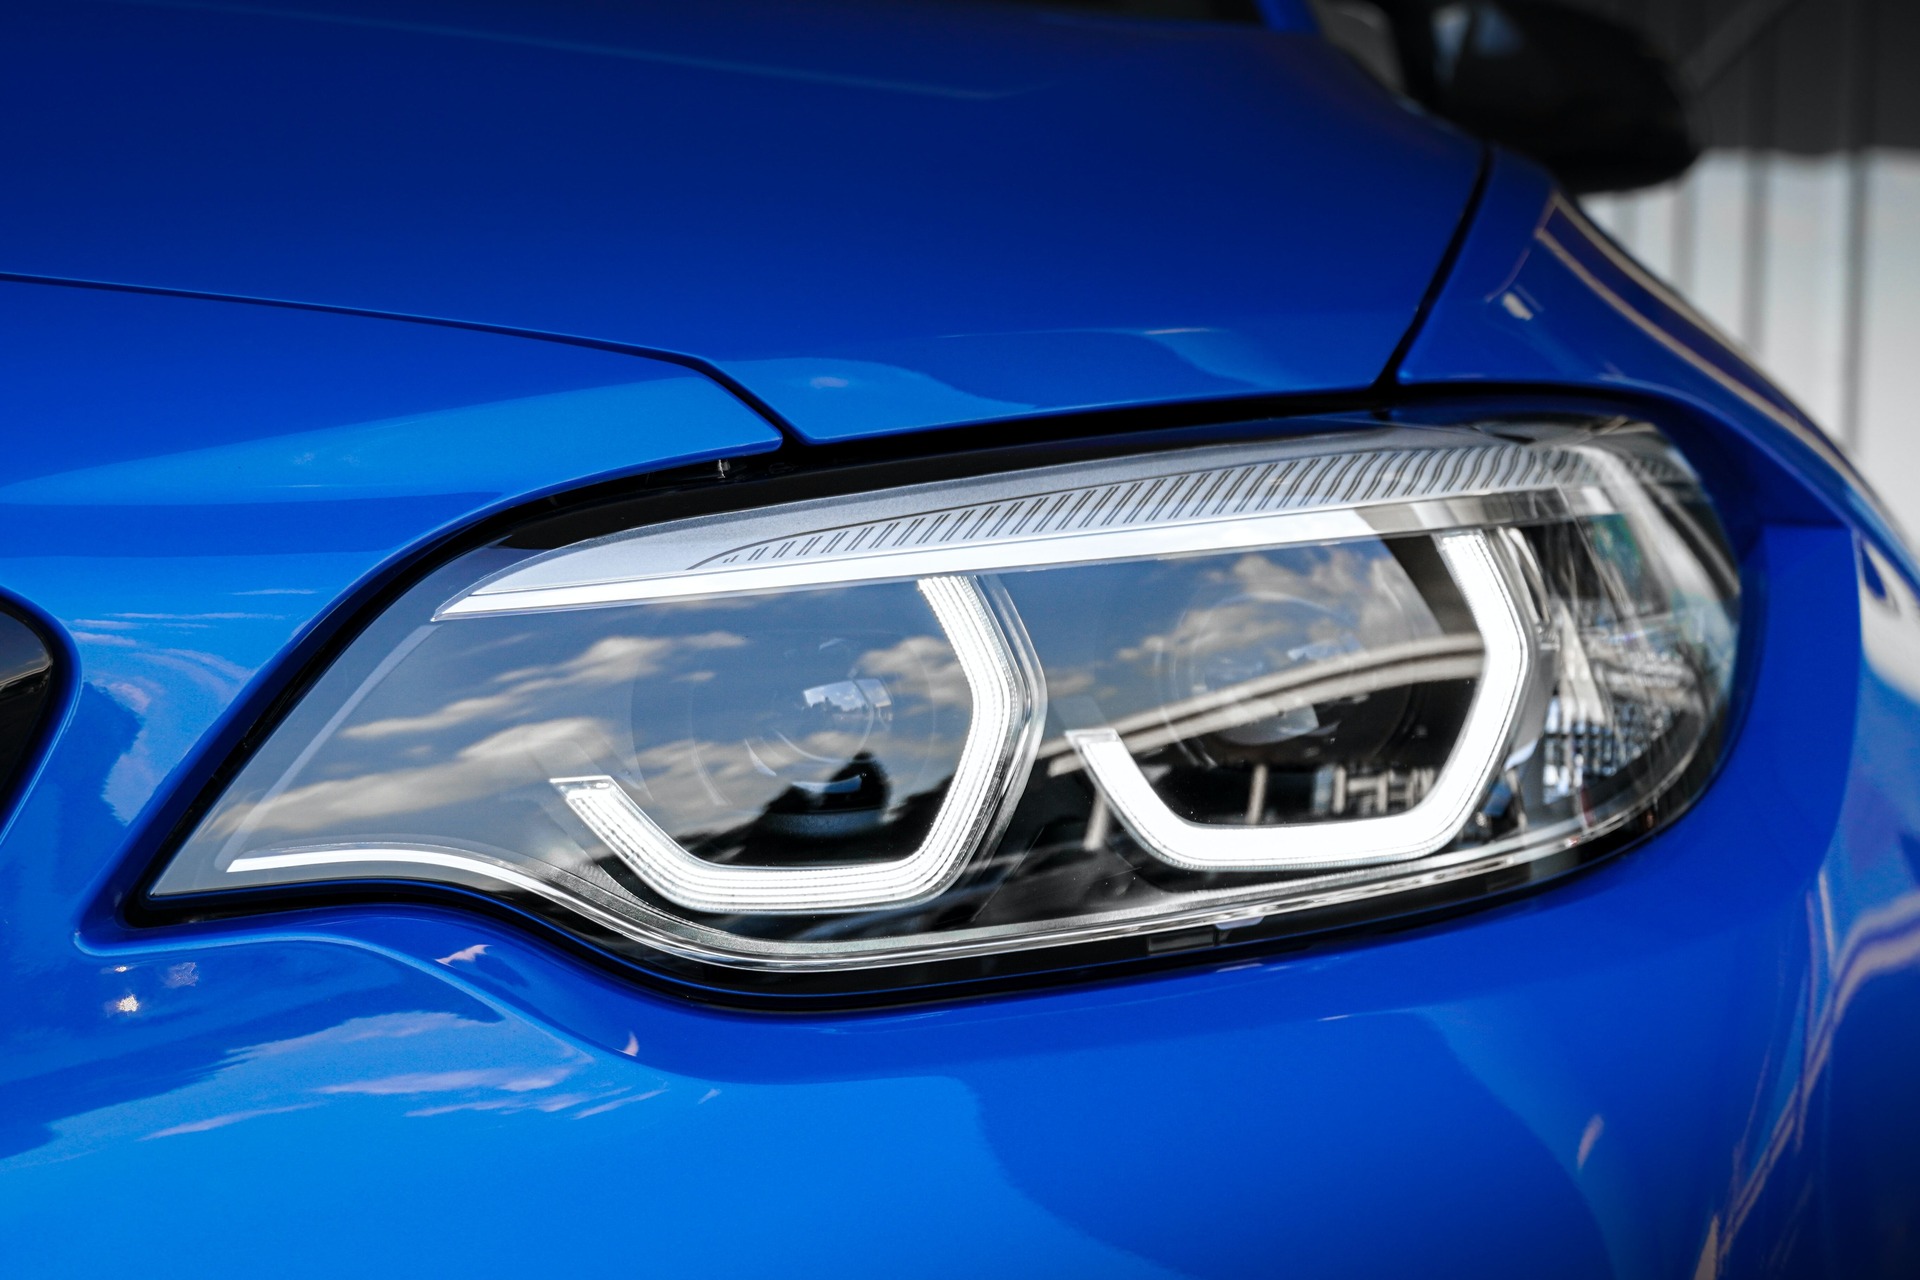 Close-up on a blue car headlight